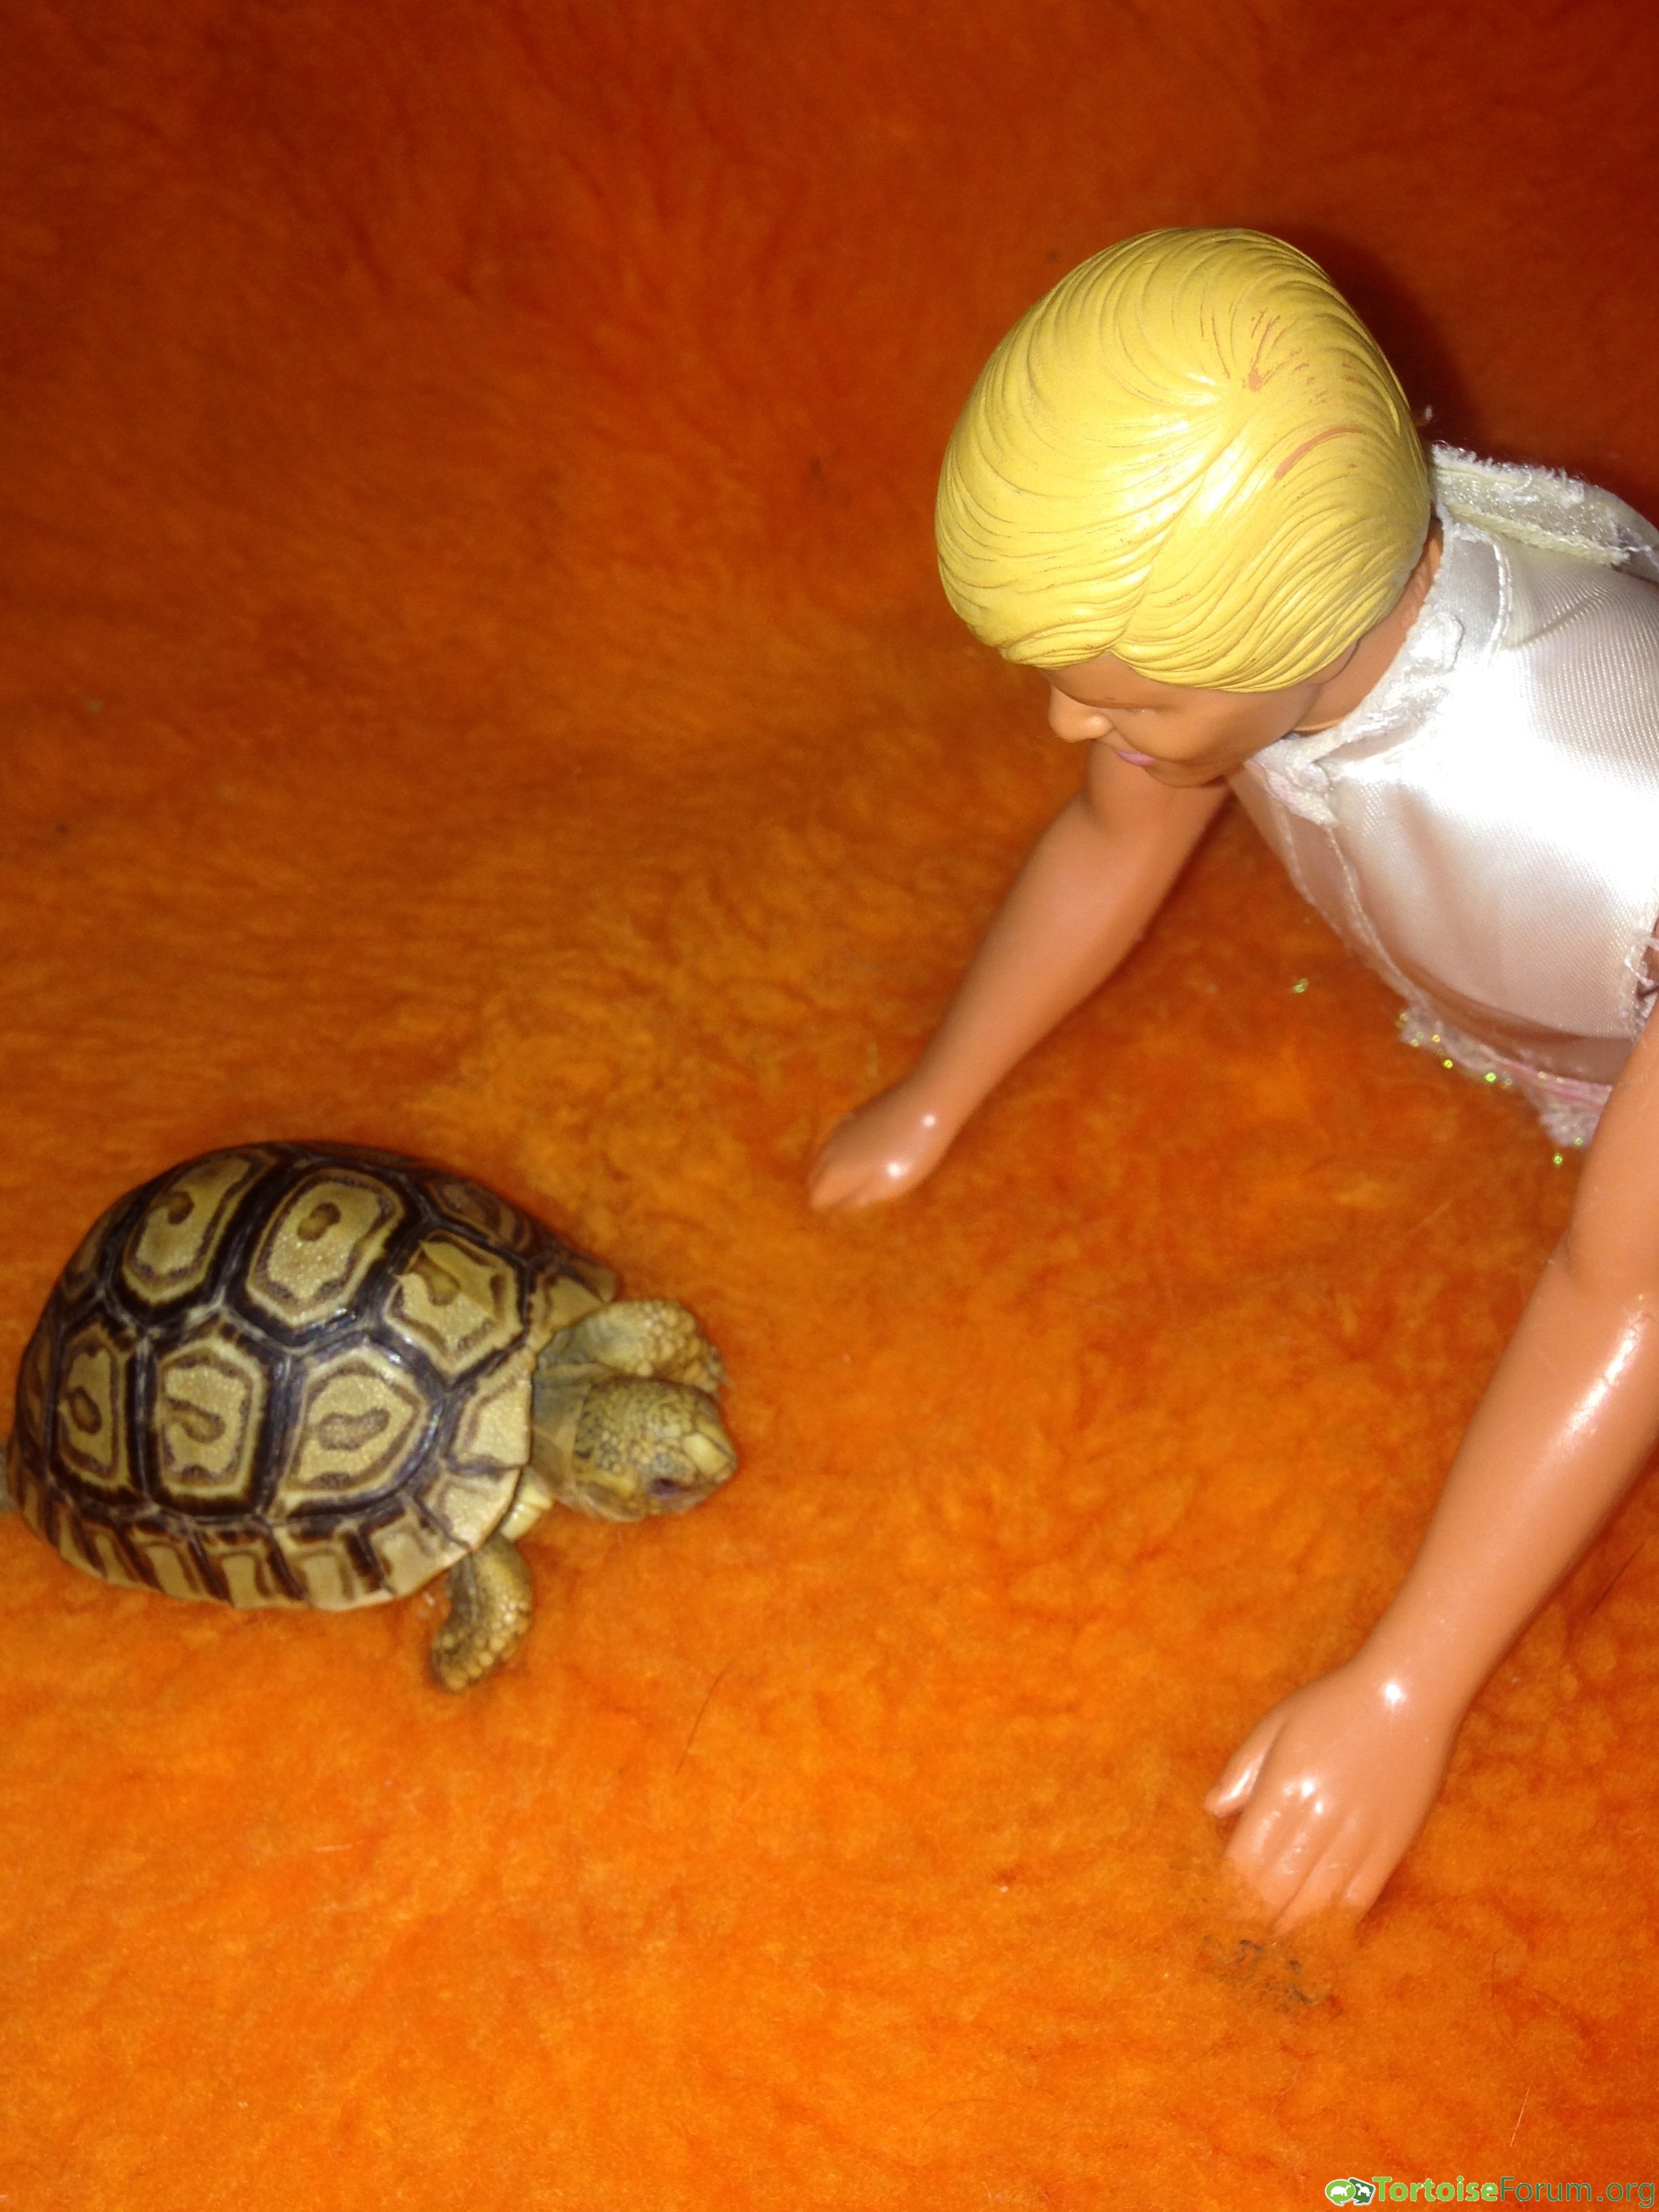 Ken vs adorable leopard tortoise